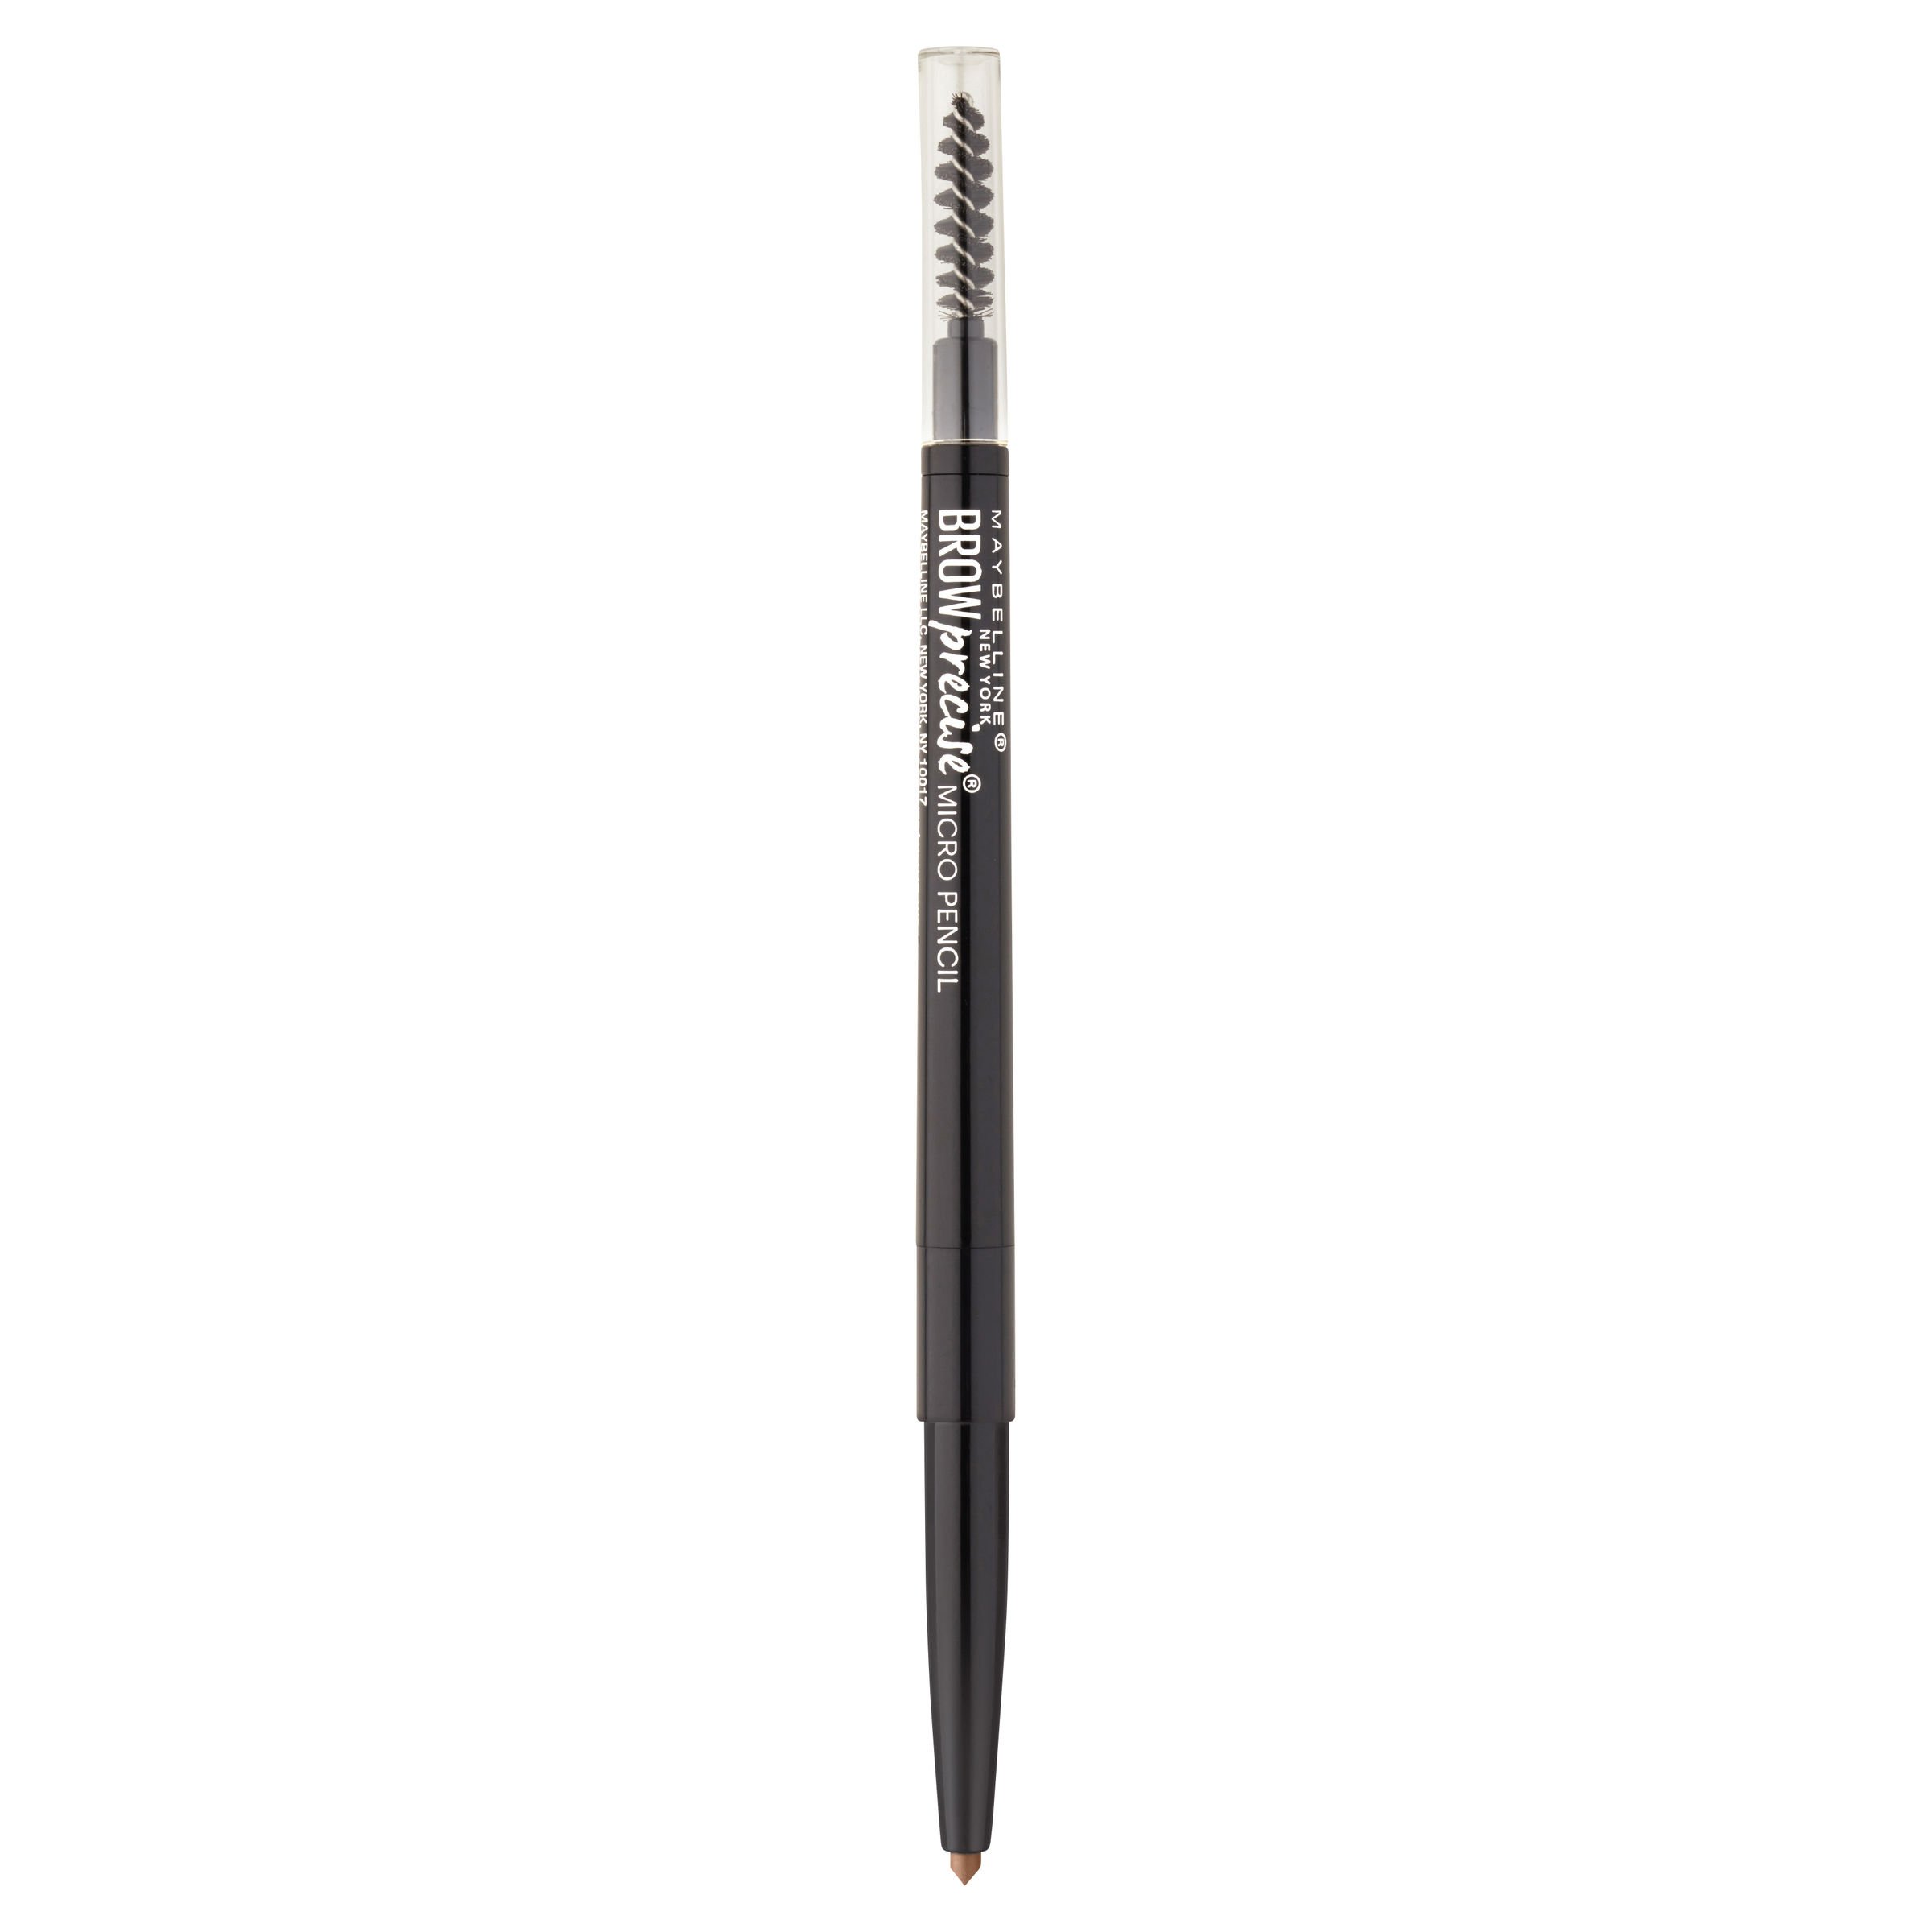 Amazon.com: Maybelline Makeup Brow Precise Micro Eyebrow Pencil ...